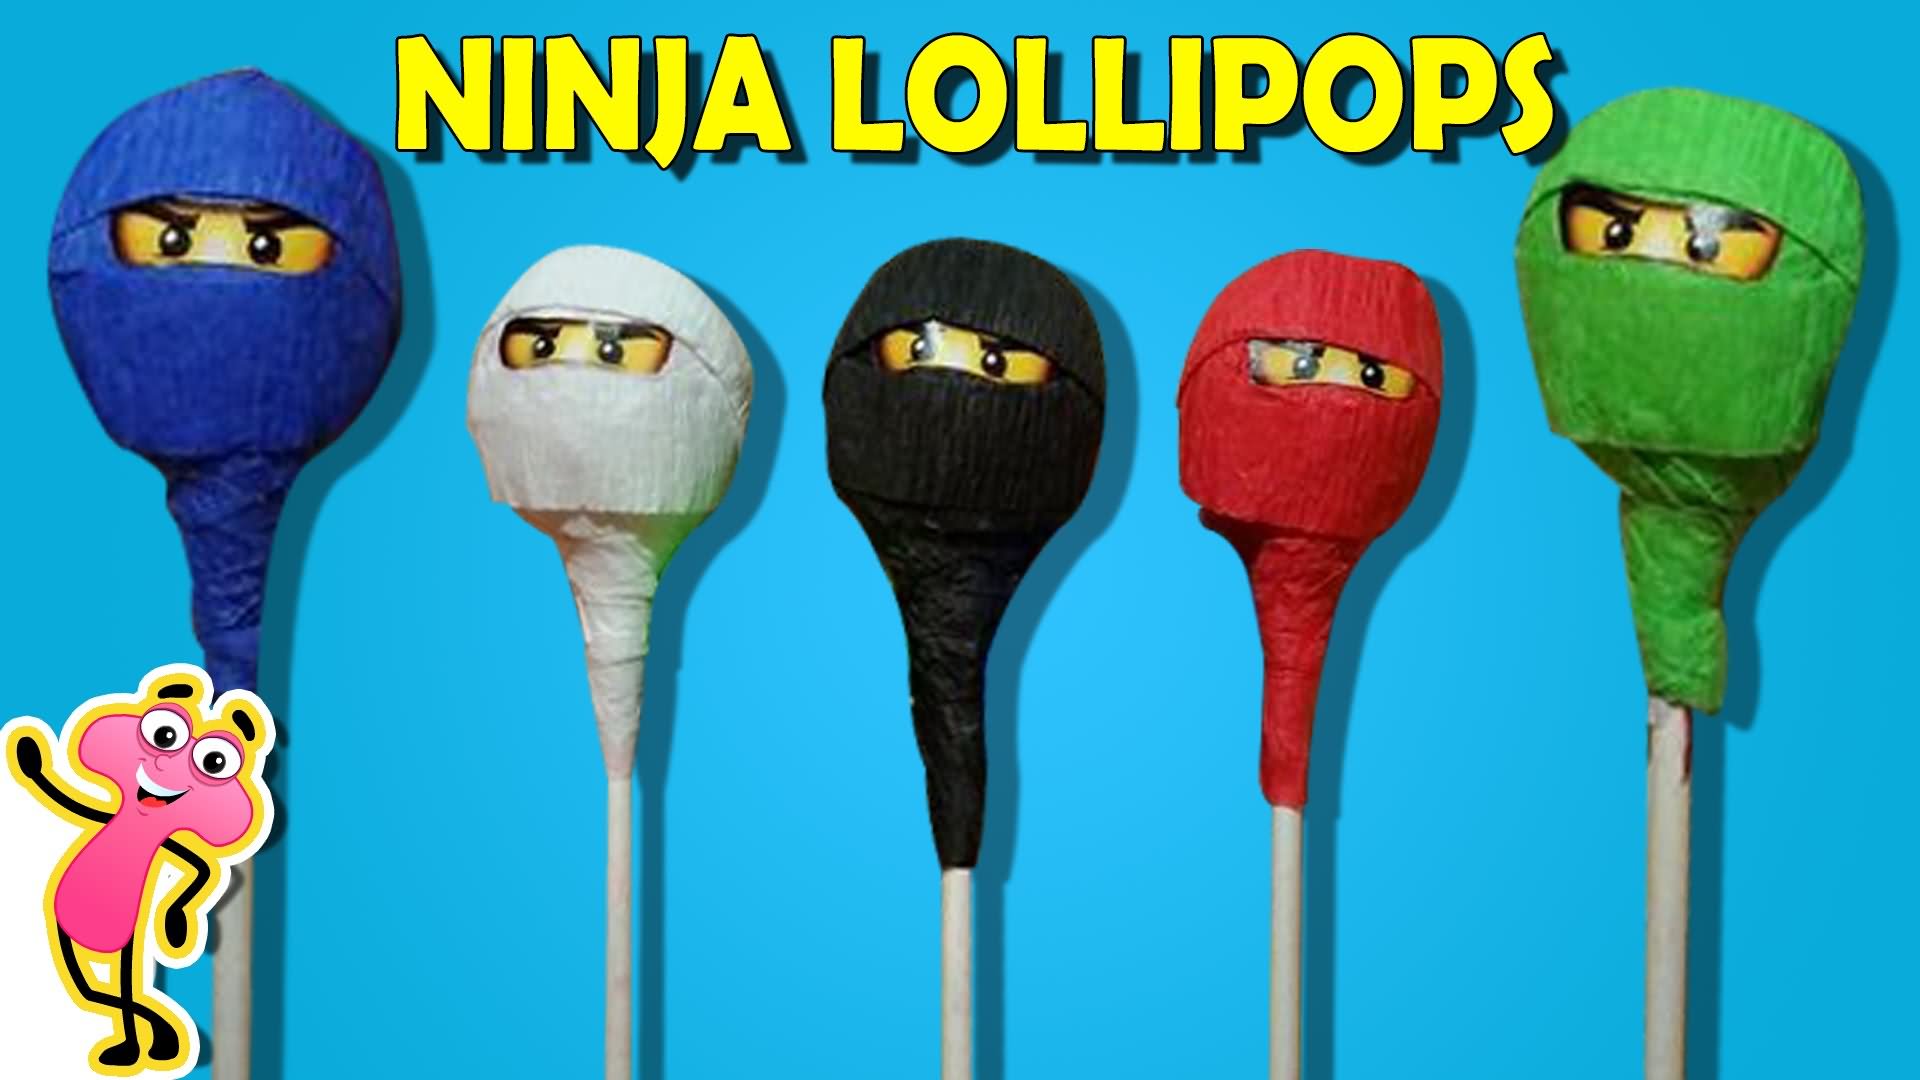 Funny Ninja Lollipops Image